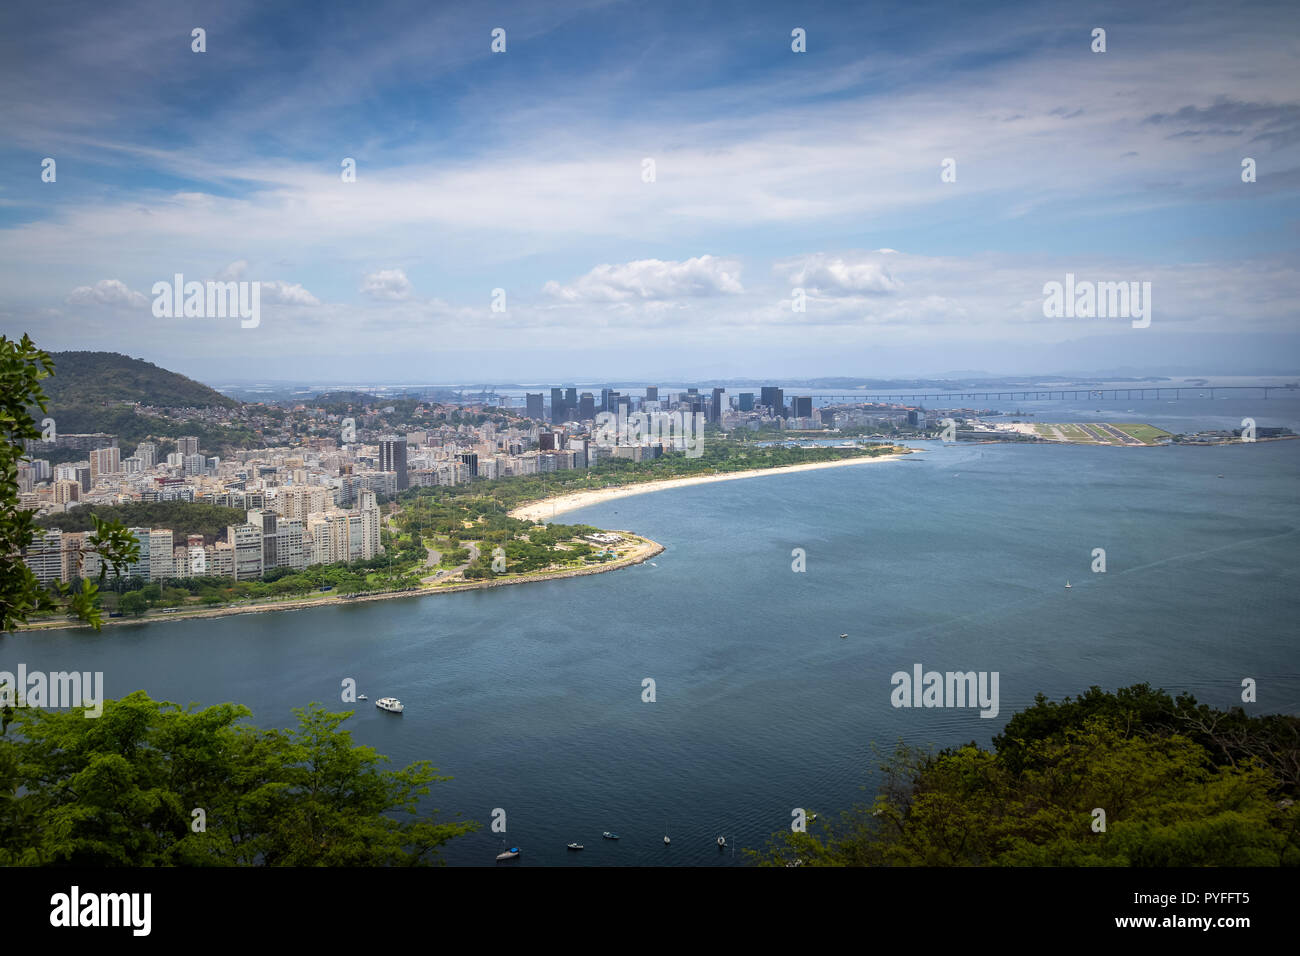 Panoramica vista aerea di Rio de Janeiro, Baia di Guanabara e Flamengo Park - Rio de Janeiro, Brasile Foto Stock